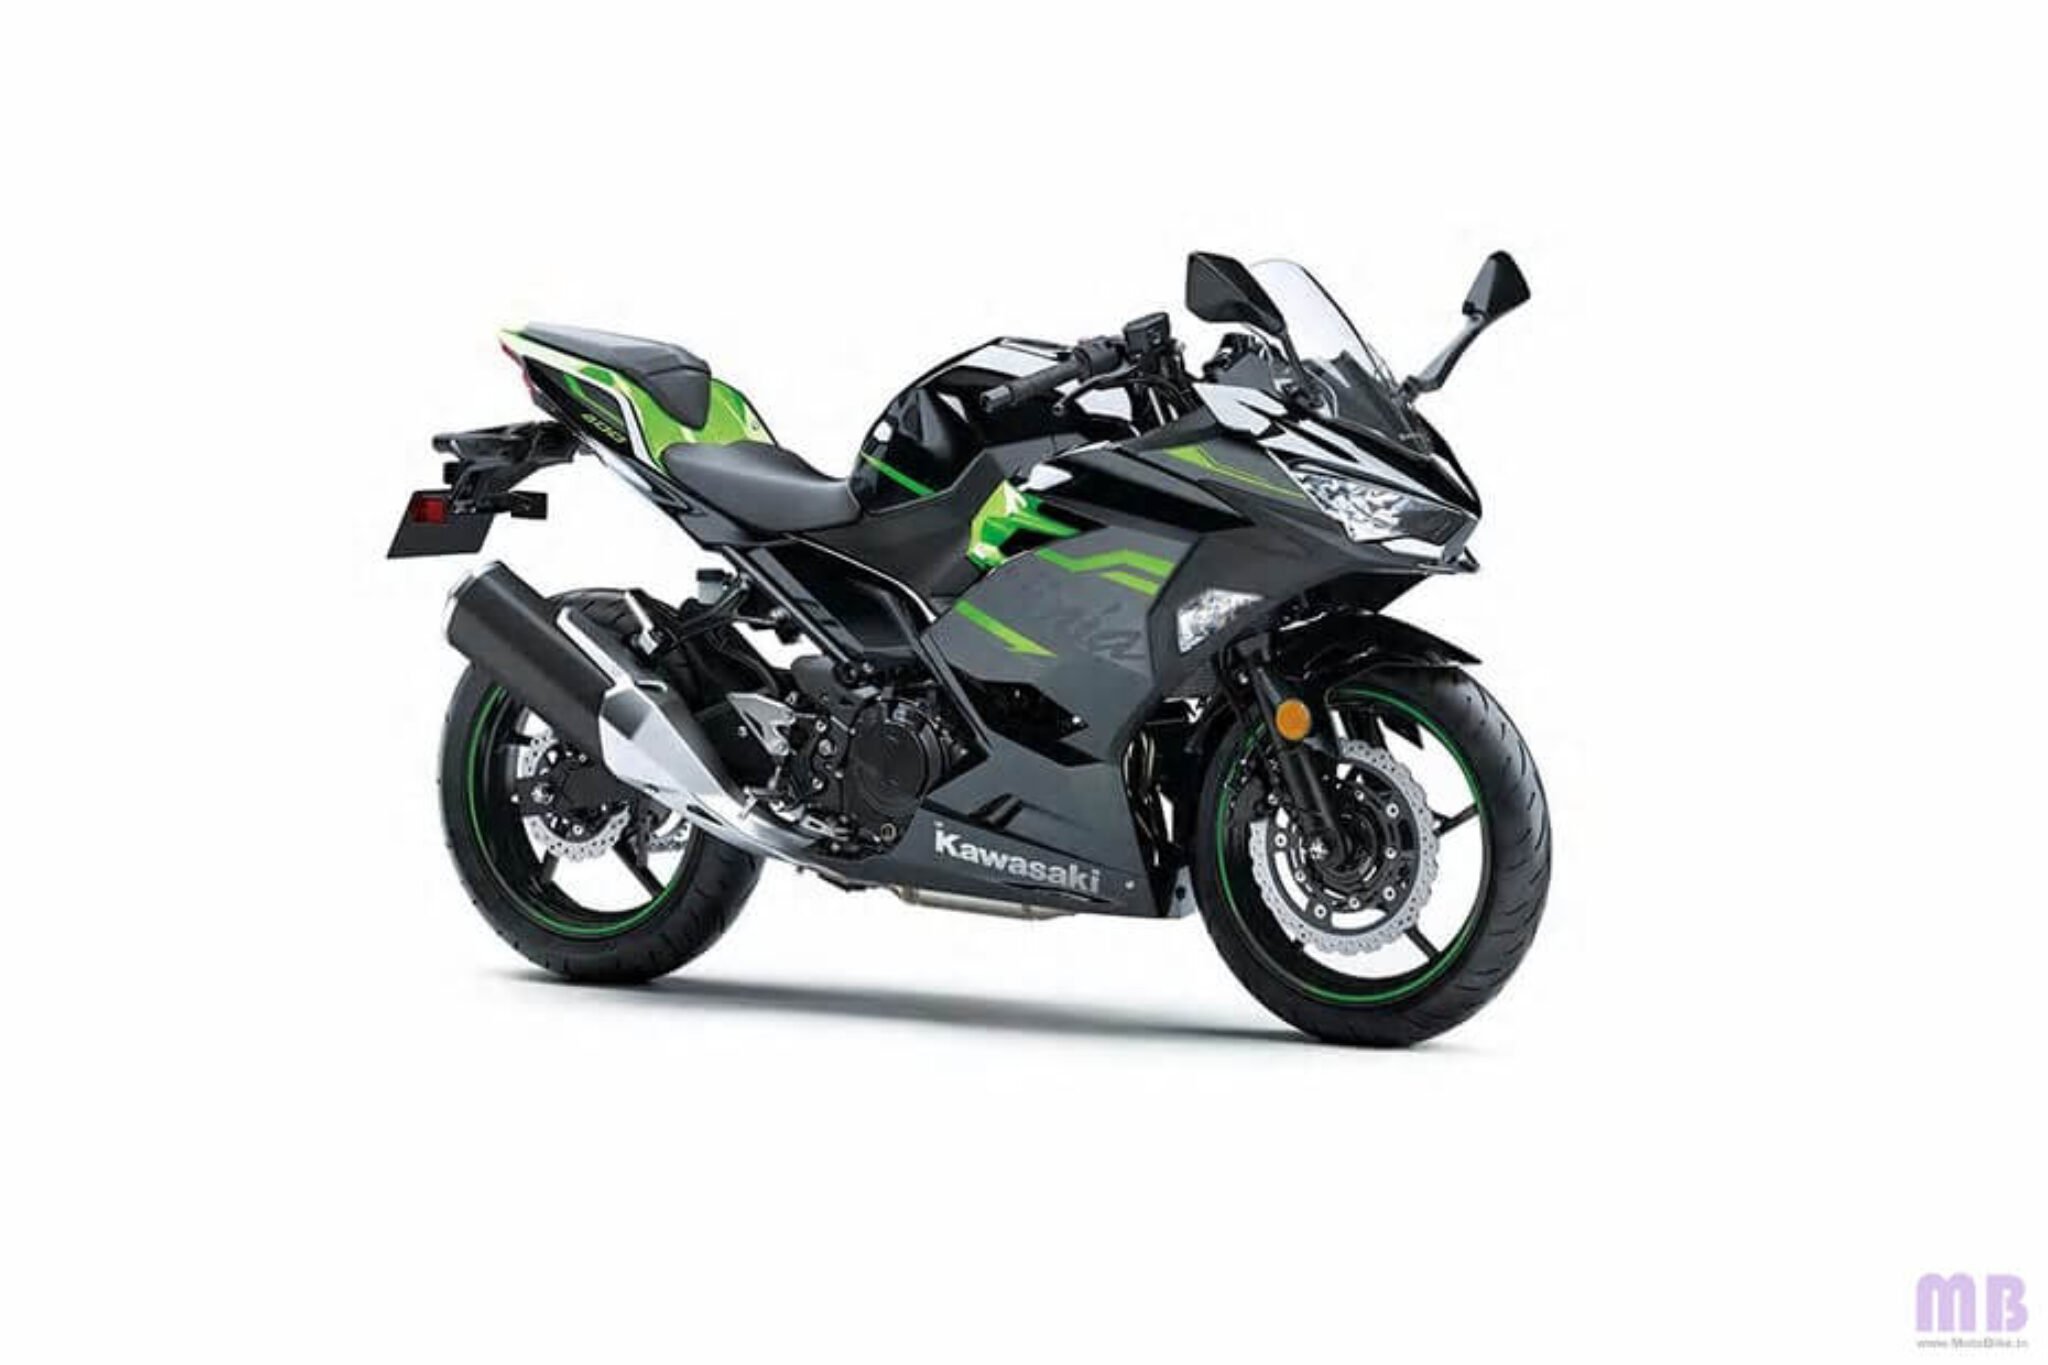 Kawasaki Ninja 400 Expected Price, Images, Specs, Mileage, Colours